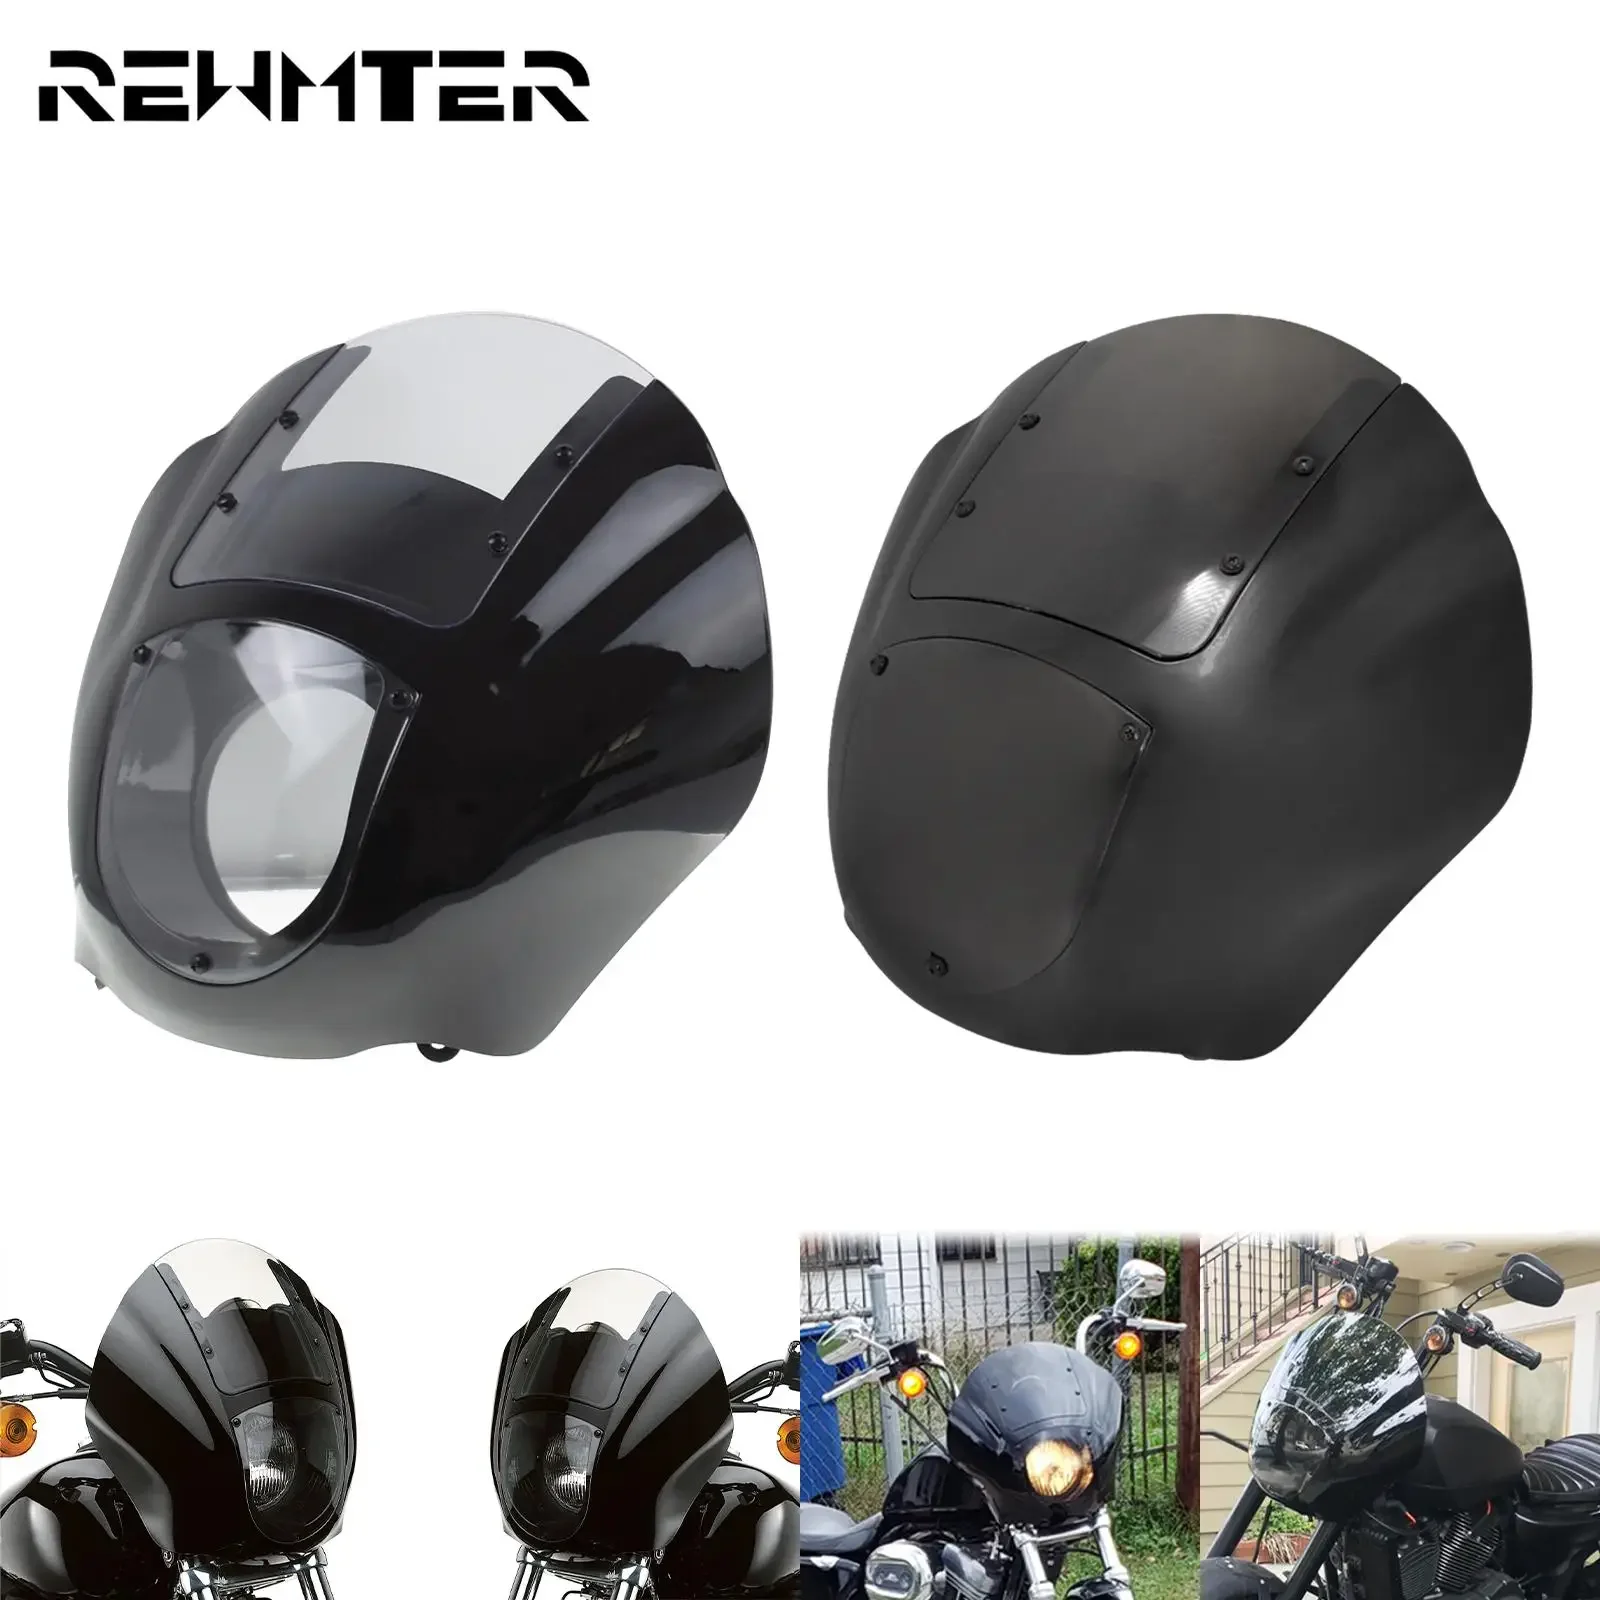 

Motorcycle Black Quarter Fairing Windshield Windscreen Headlight Fairing Mask Cowl For Harley Dyna FXR Sportster XL 1200 883